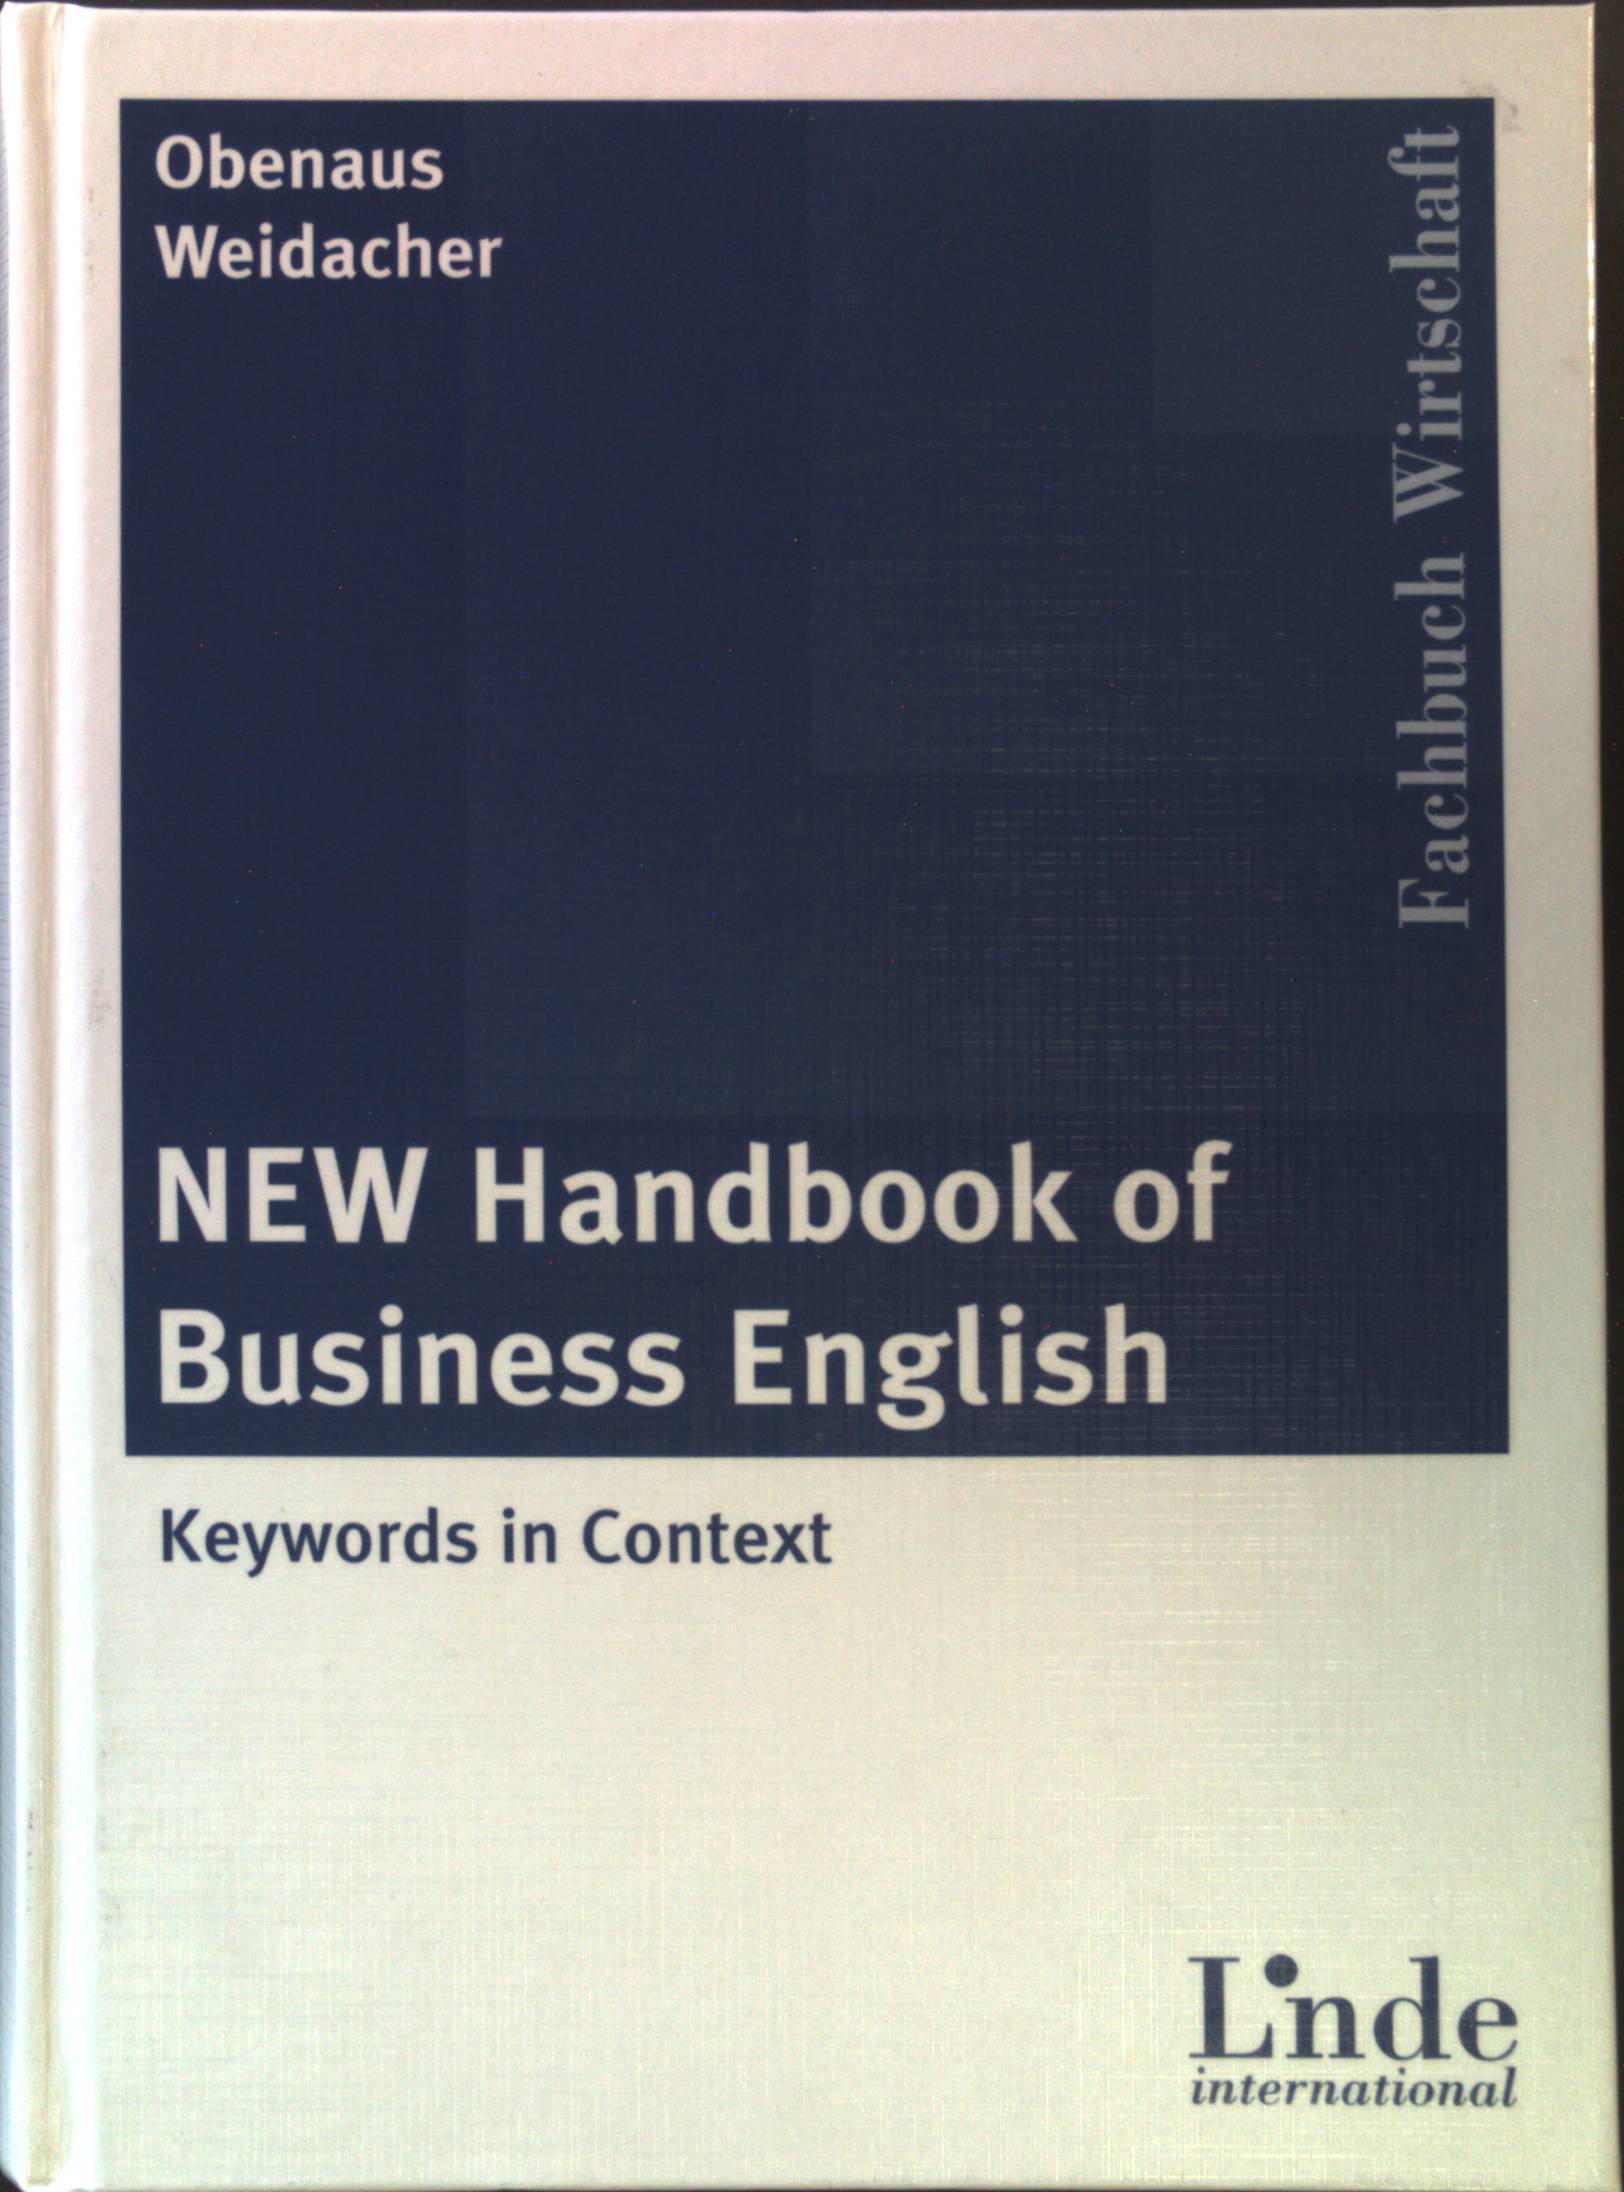 New Handbook of Business English: Keywords in Context - Obenaus, Wolfgang and Josef Weidacher